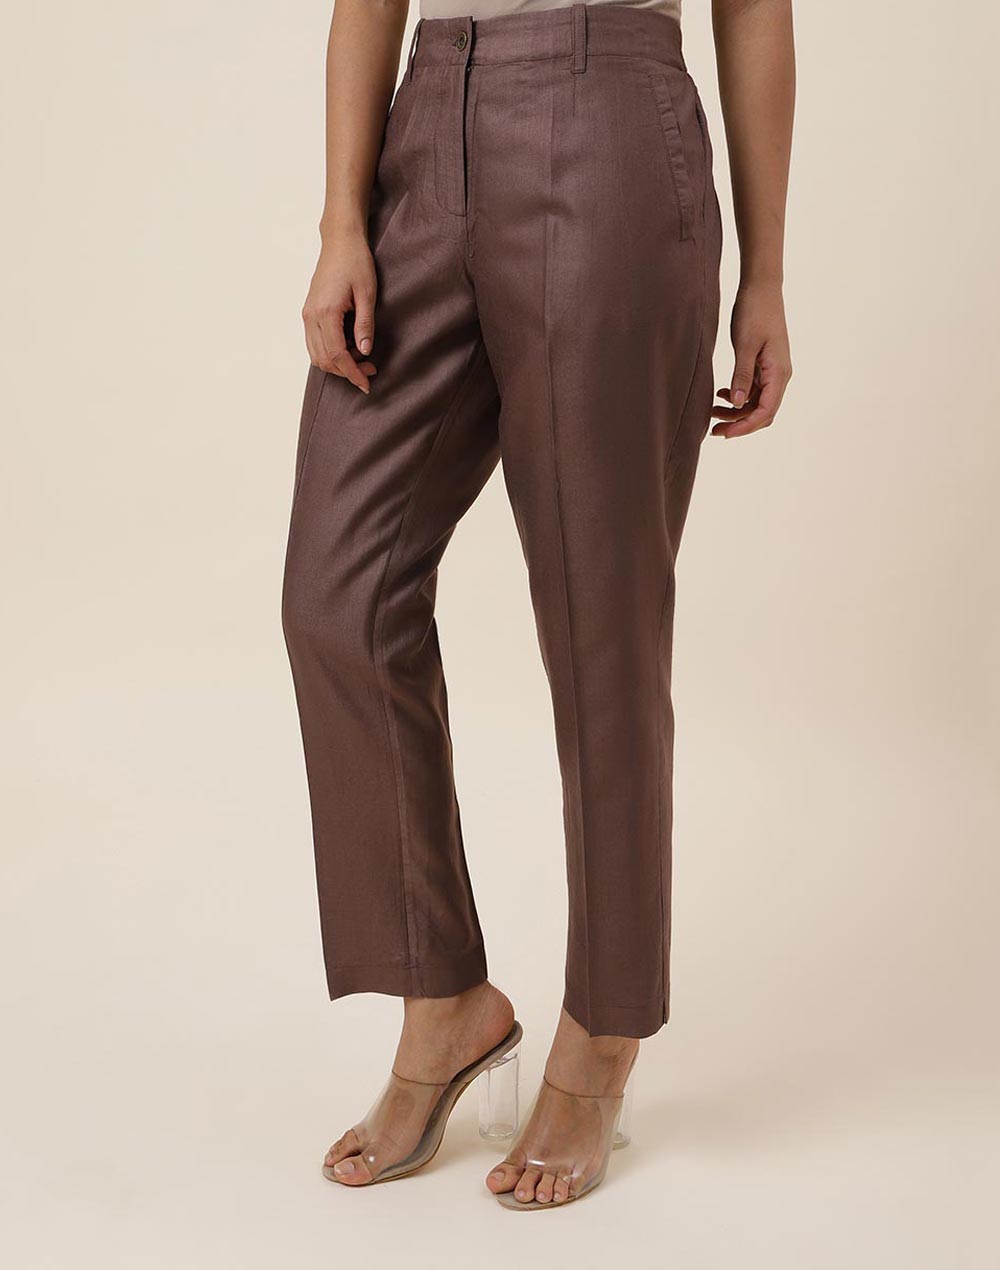 Buy Formal Pants for Women Online at Fabindia